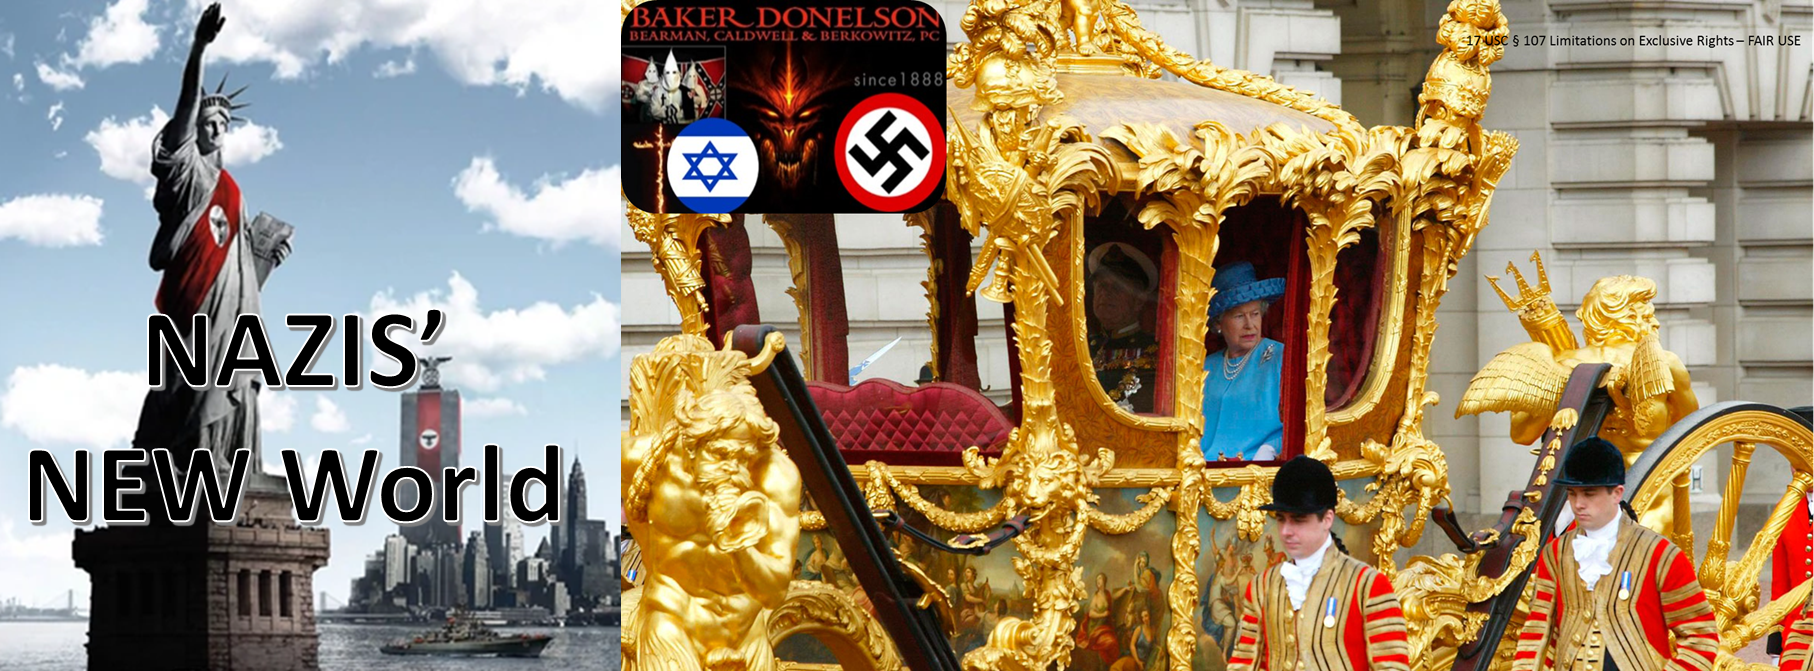 NAZI Jews Zionists NEW World Plans